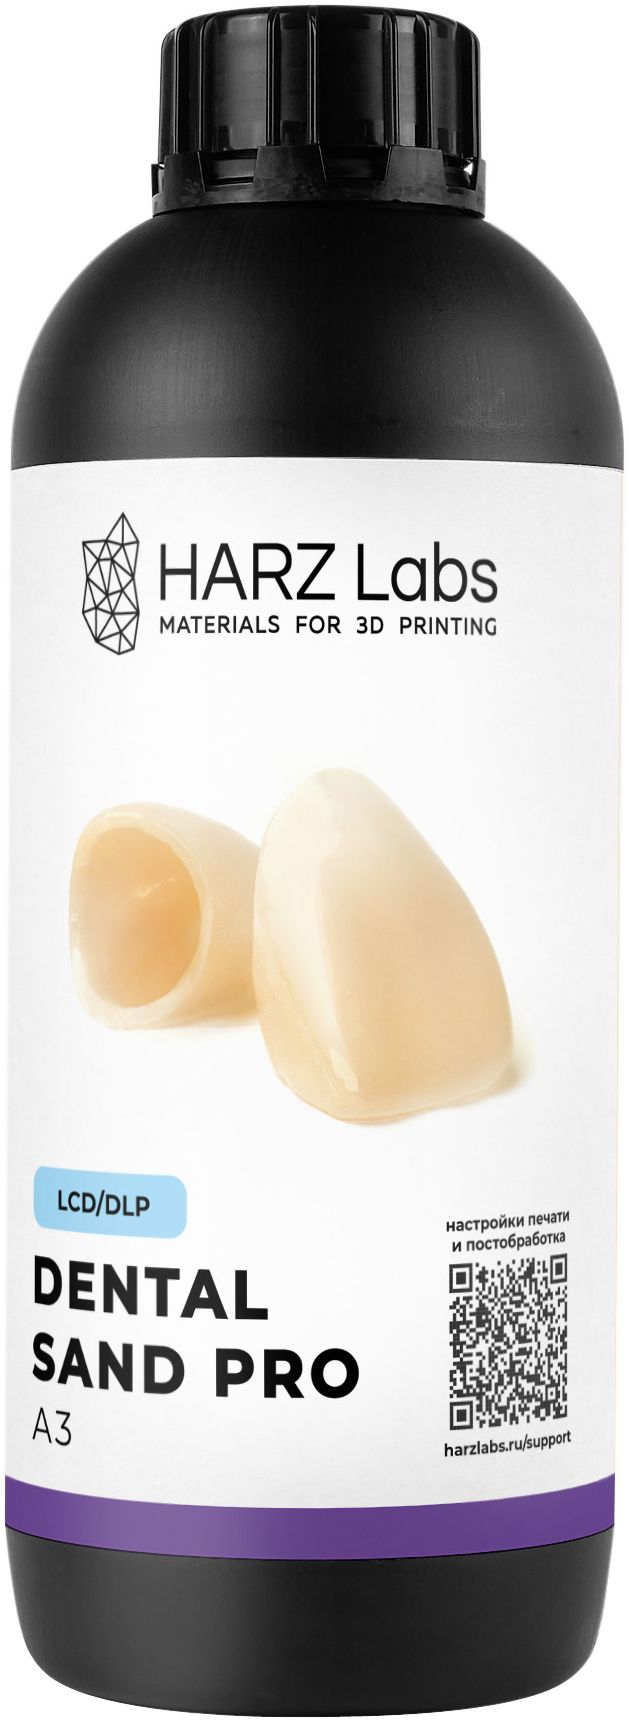 HARZ Labs Dental Sand PRO A3 LCD/DLP 1 л